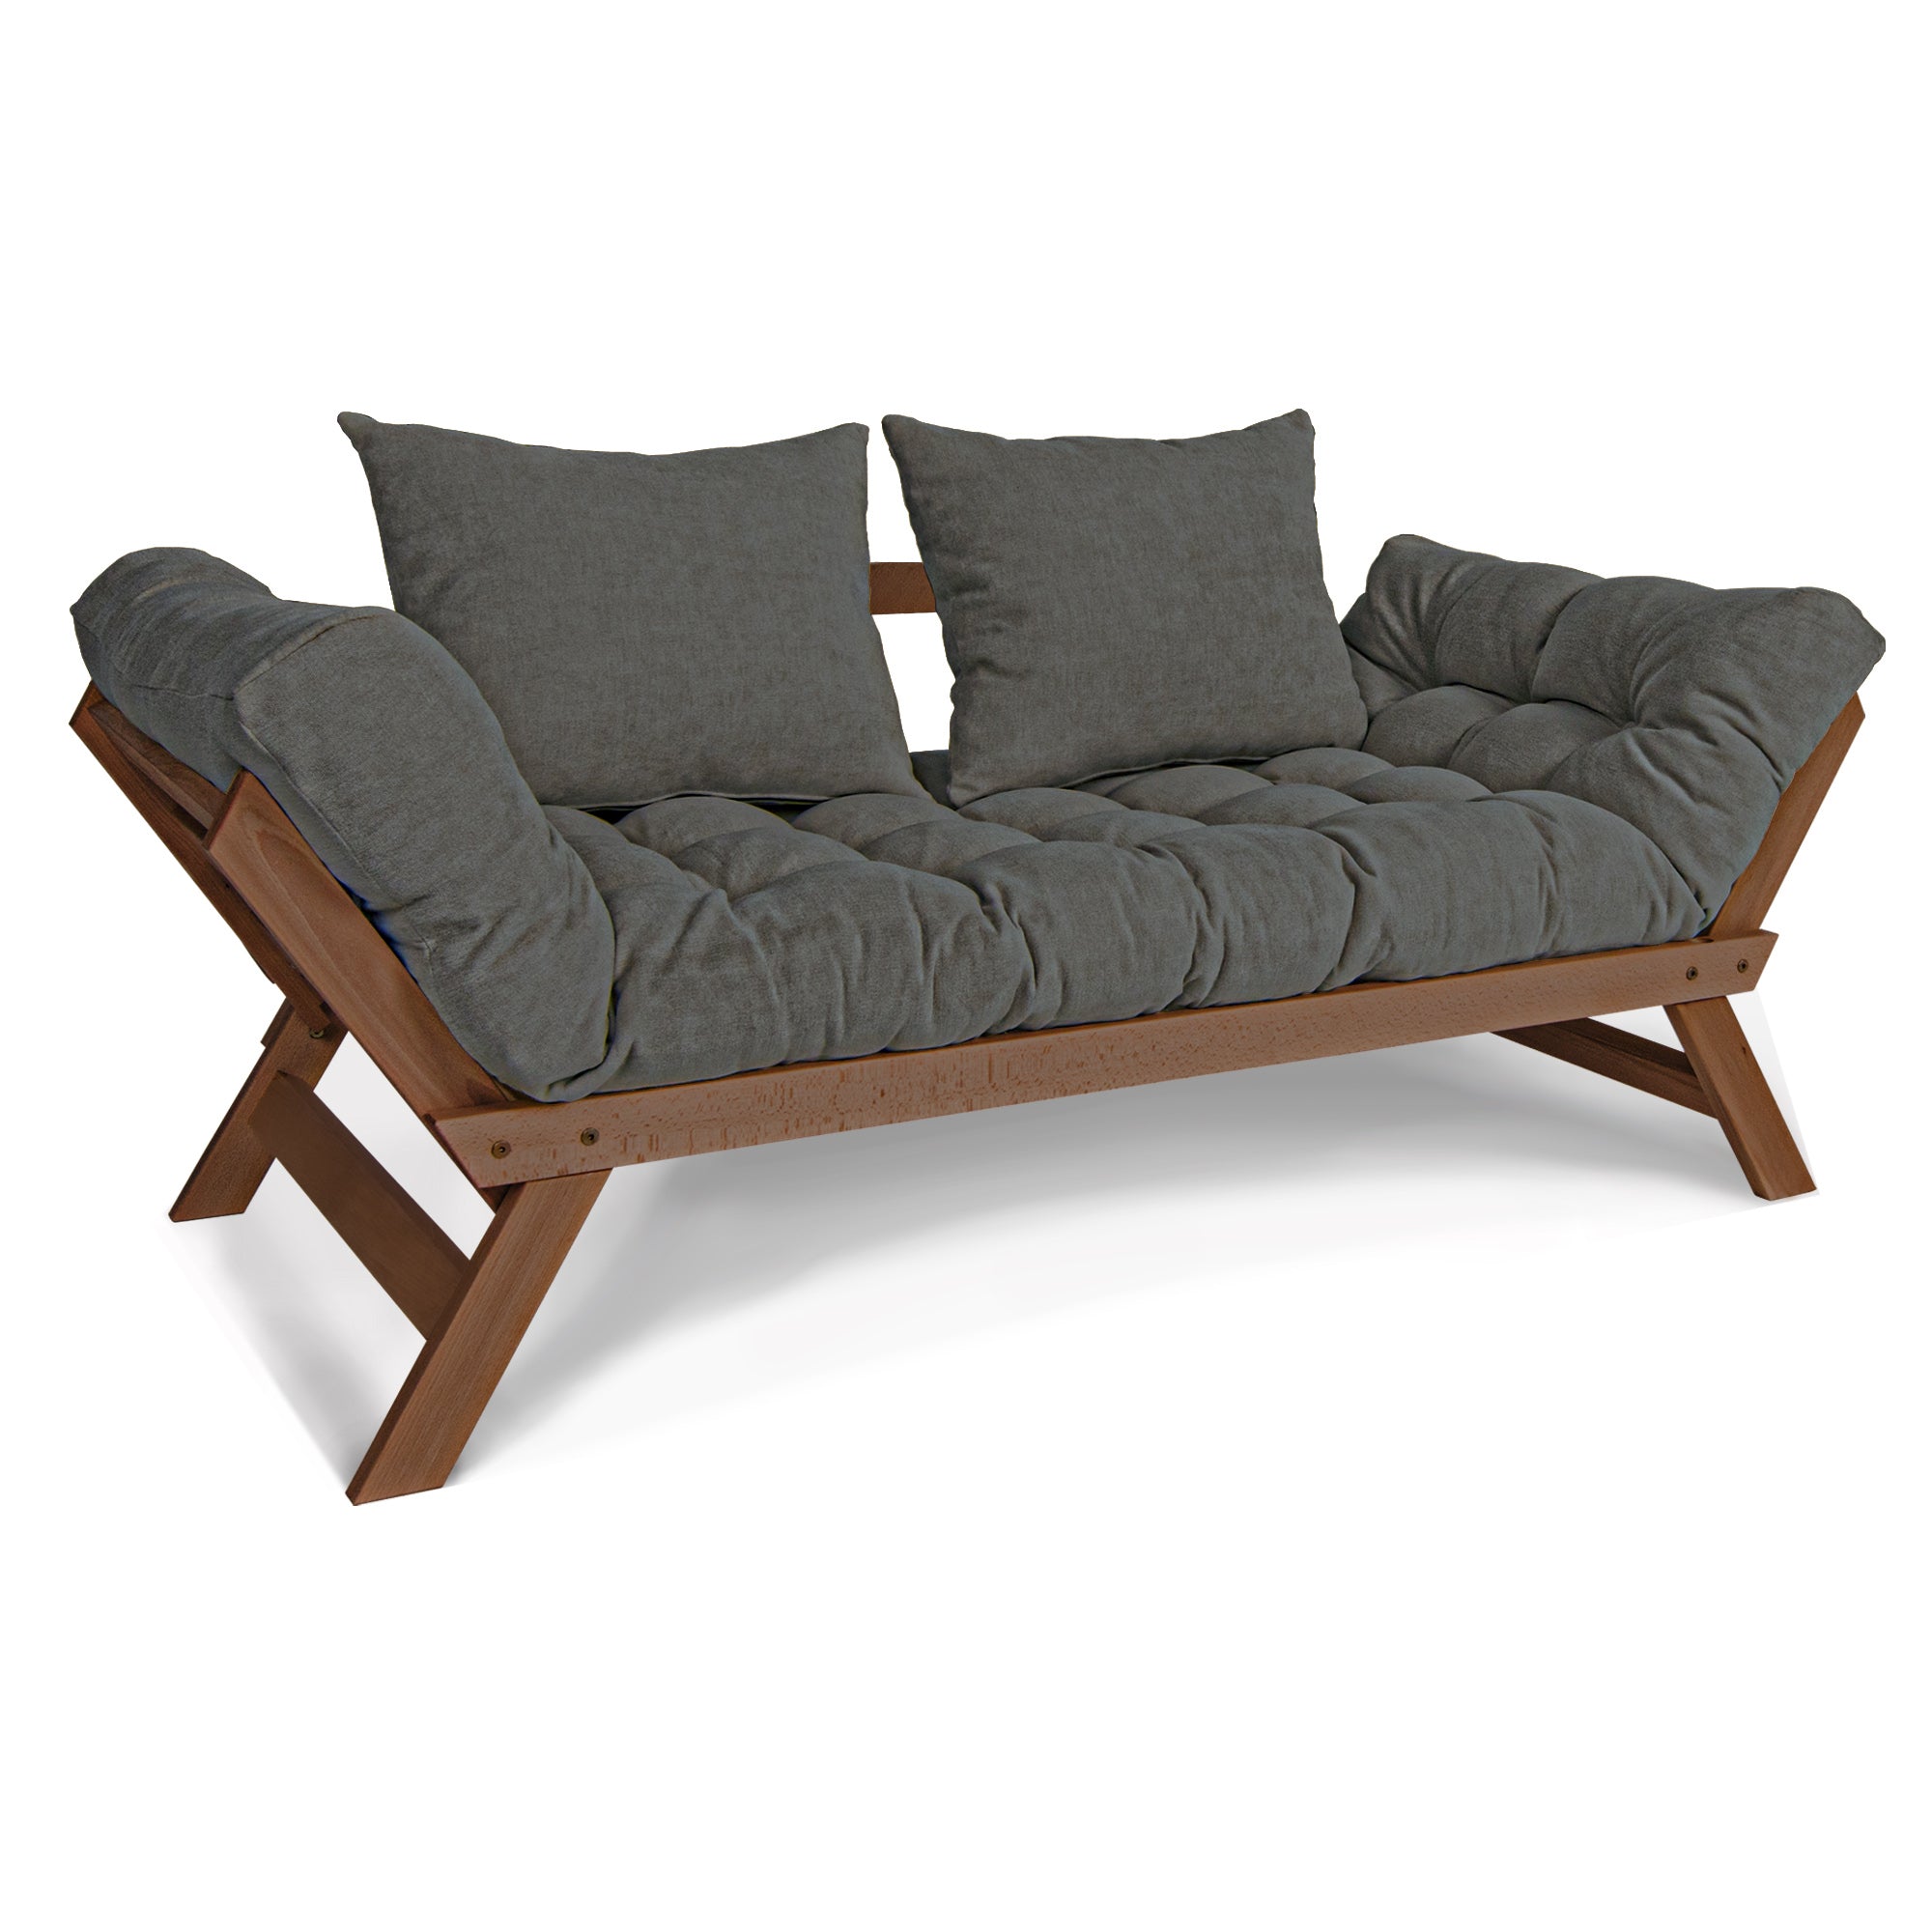 ALLEGRO Folding Sofa Bed, Beech Wood Frame, Walnut Colour upholstery-gray